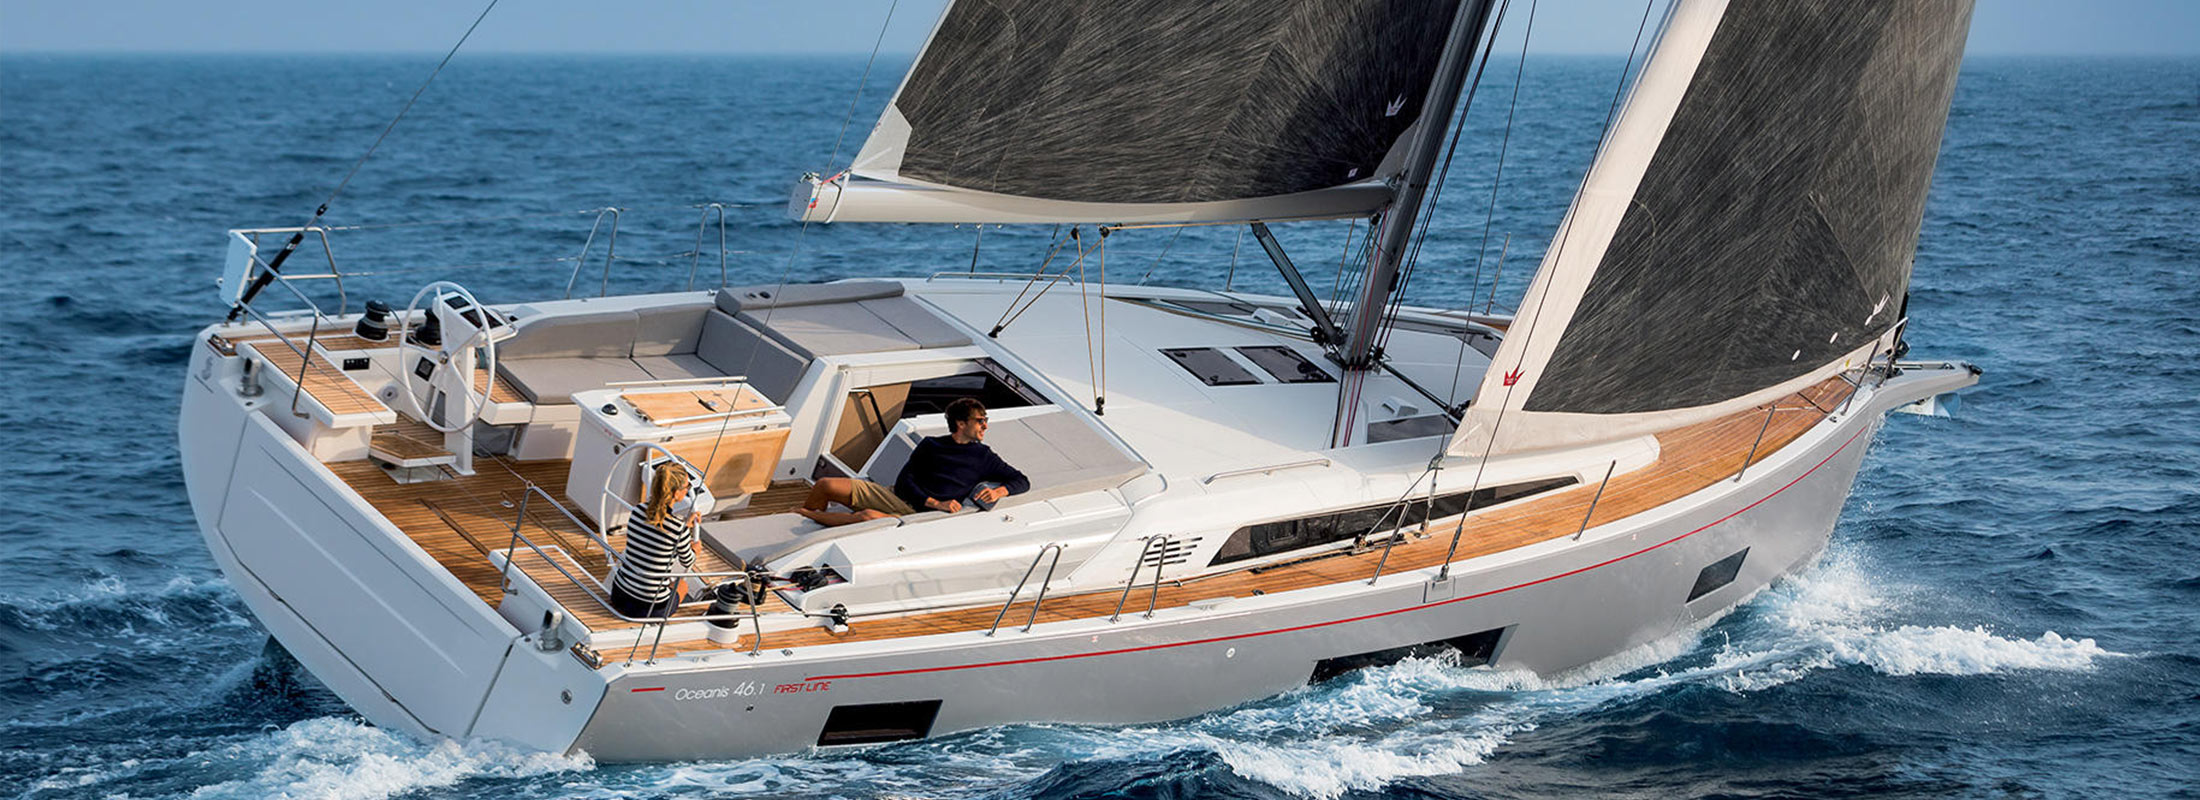 Infinity-sailing-yact-charter-a-yacht-slider-02.jpg